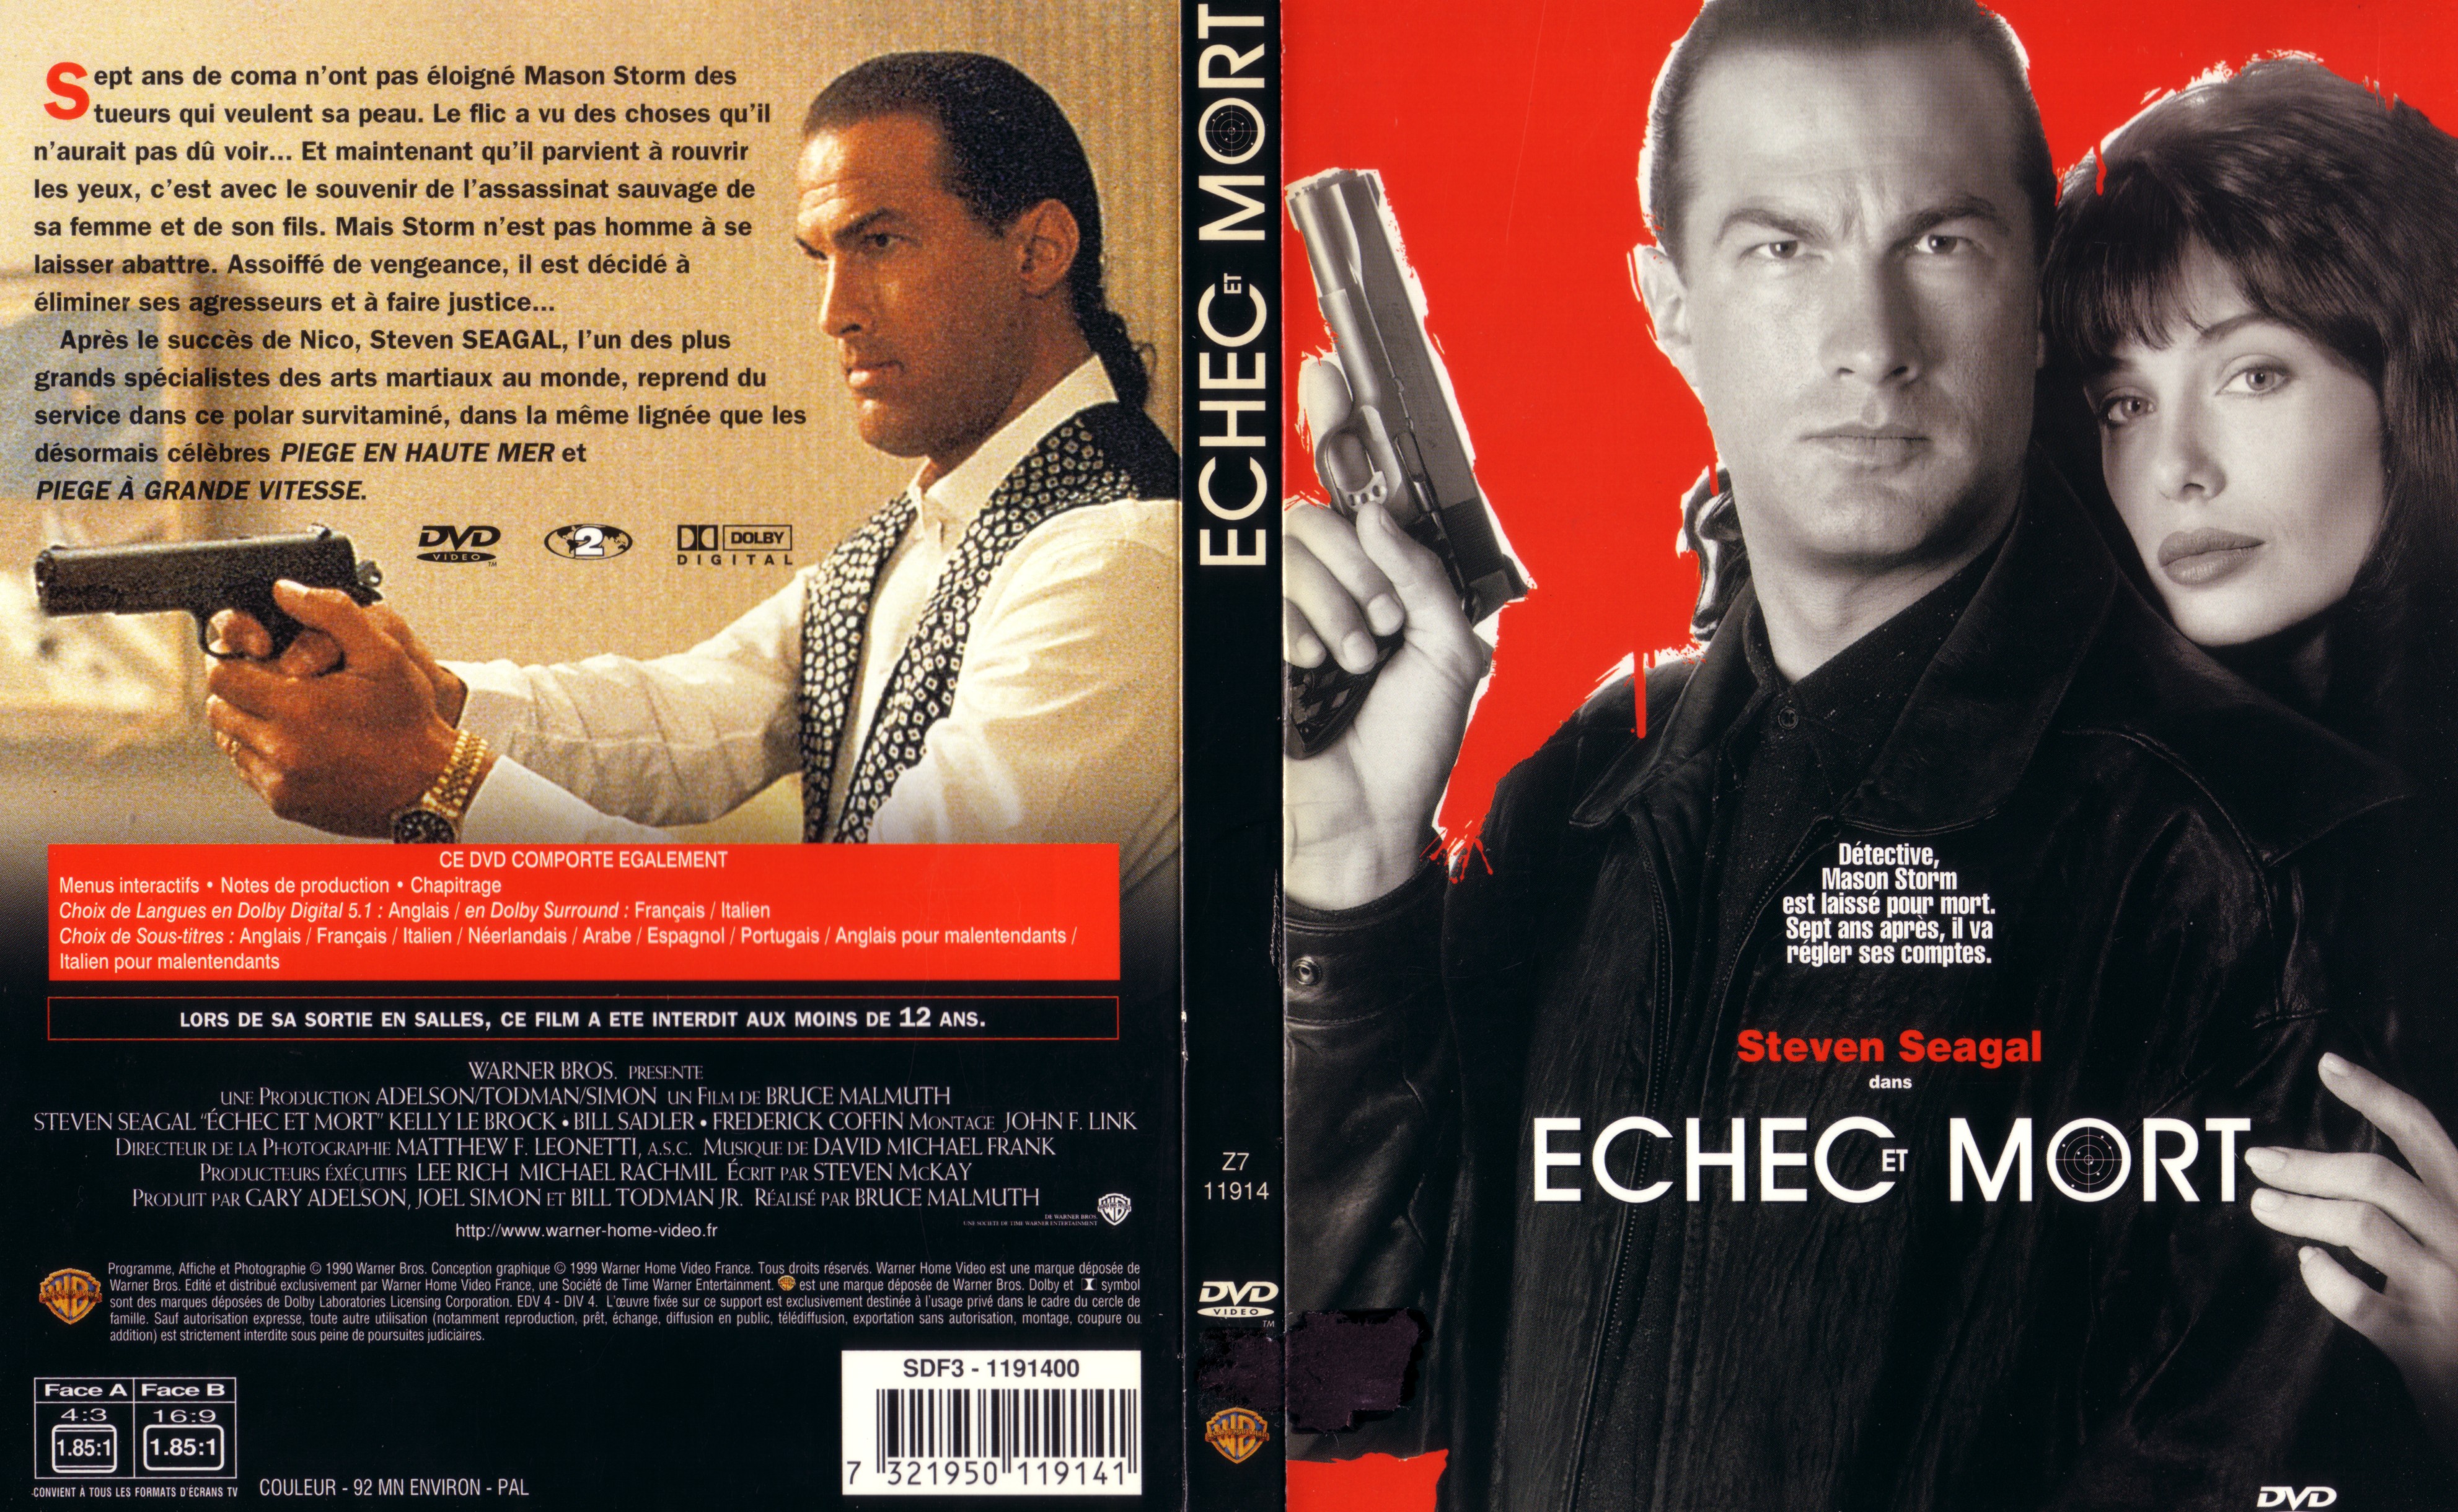 Jaquette DVD Echec et mort v2